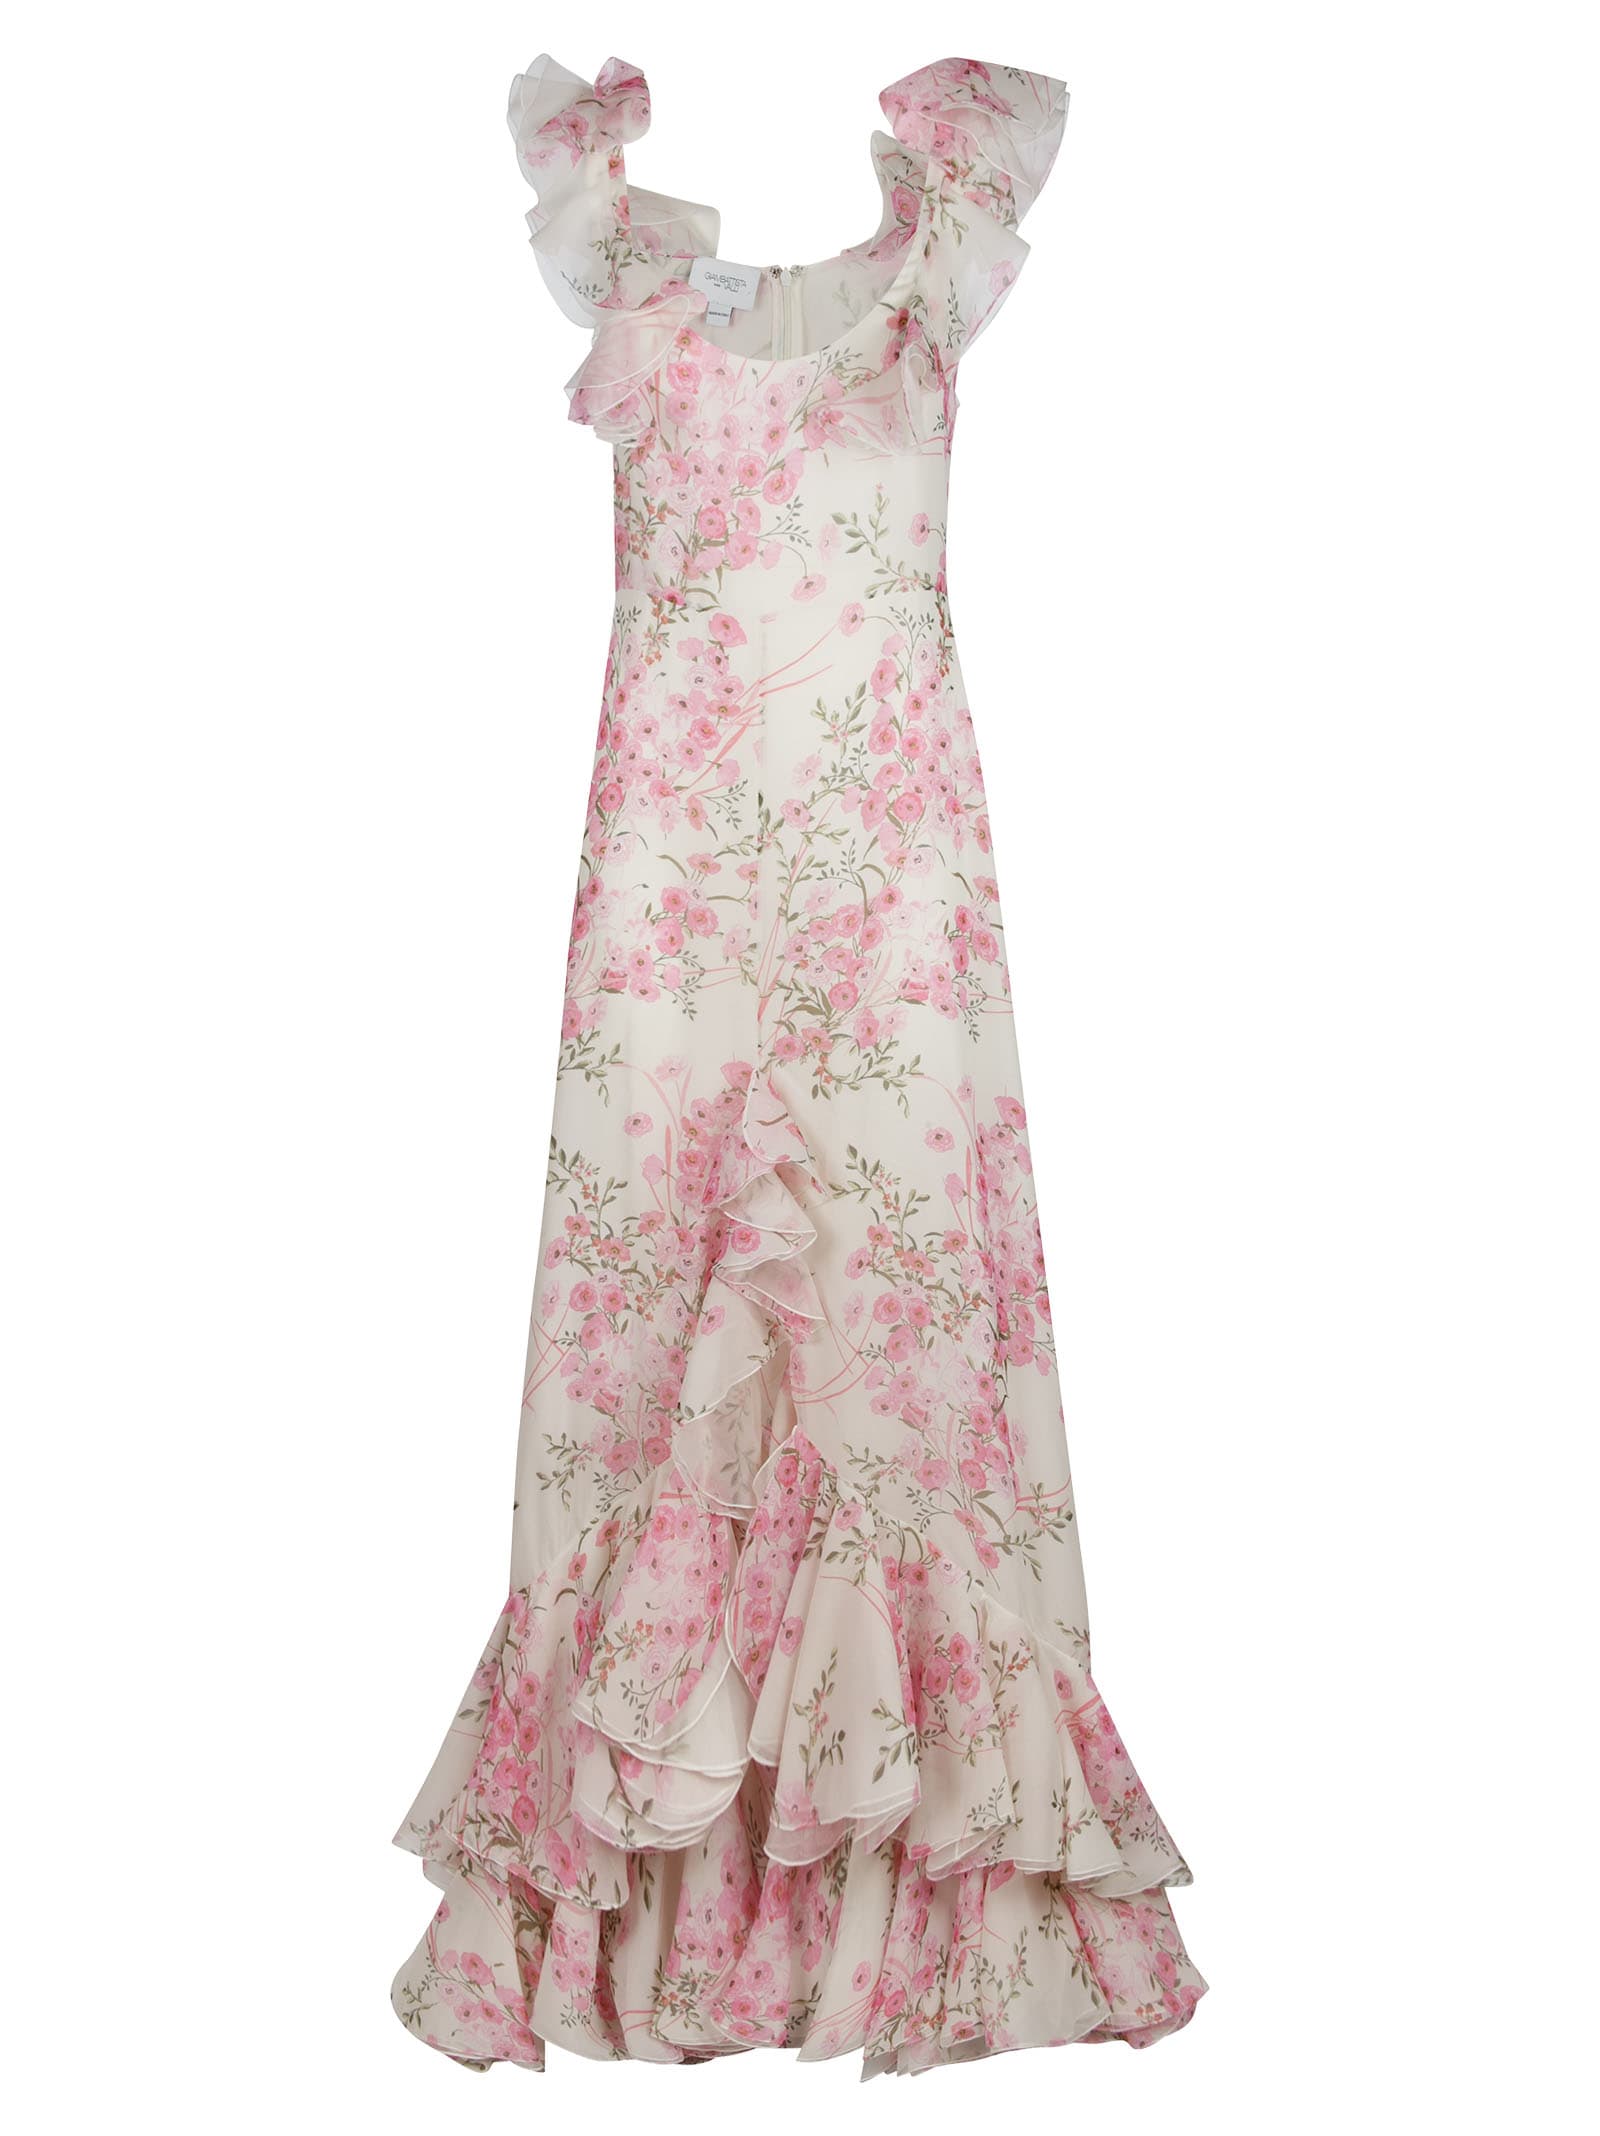 Giambattista Valli Floral Print Ruffled Dress